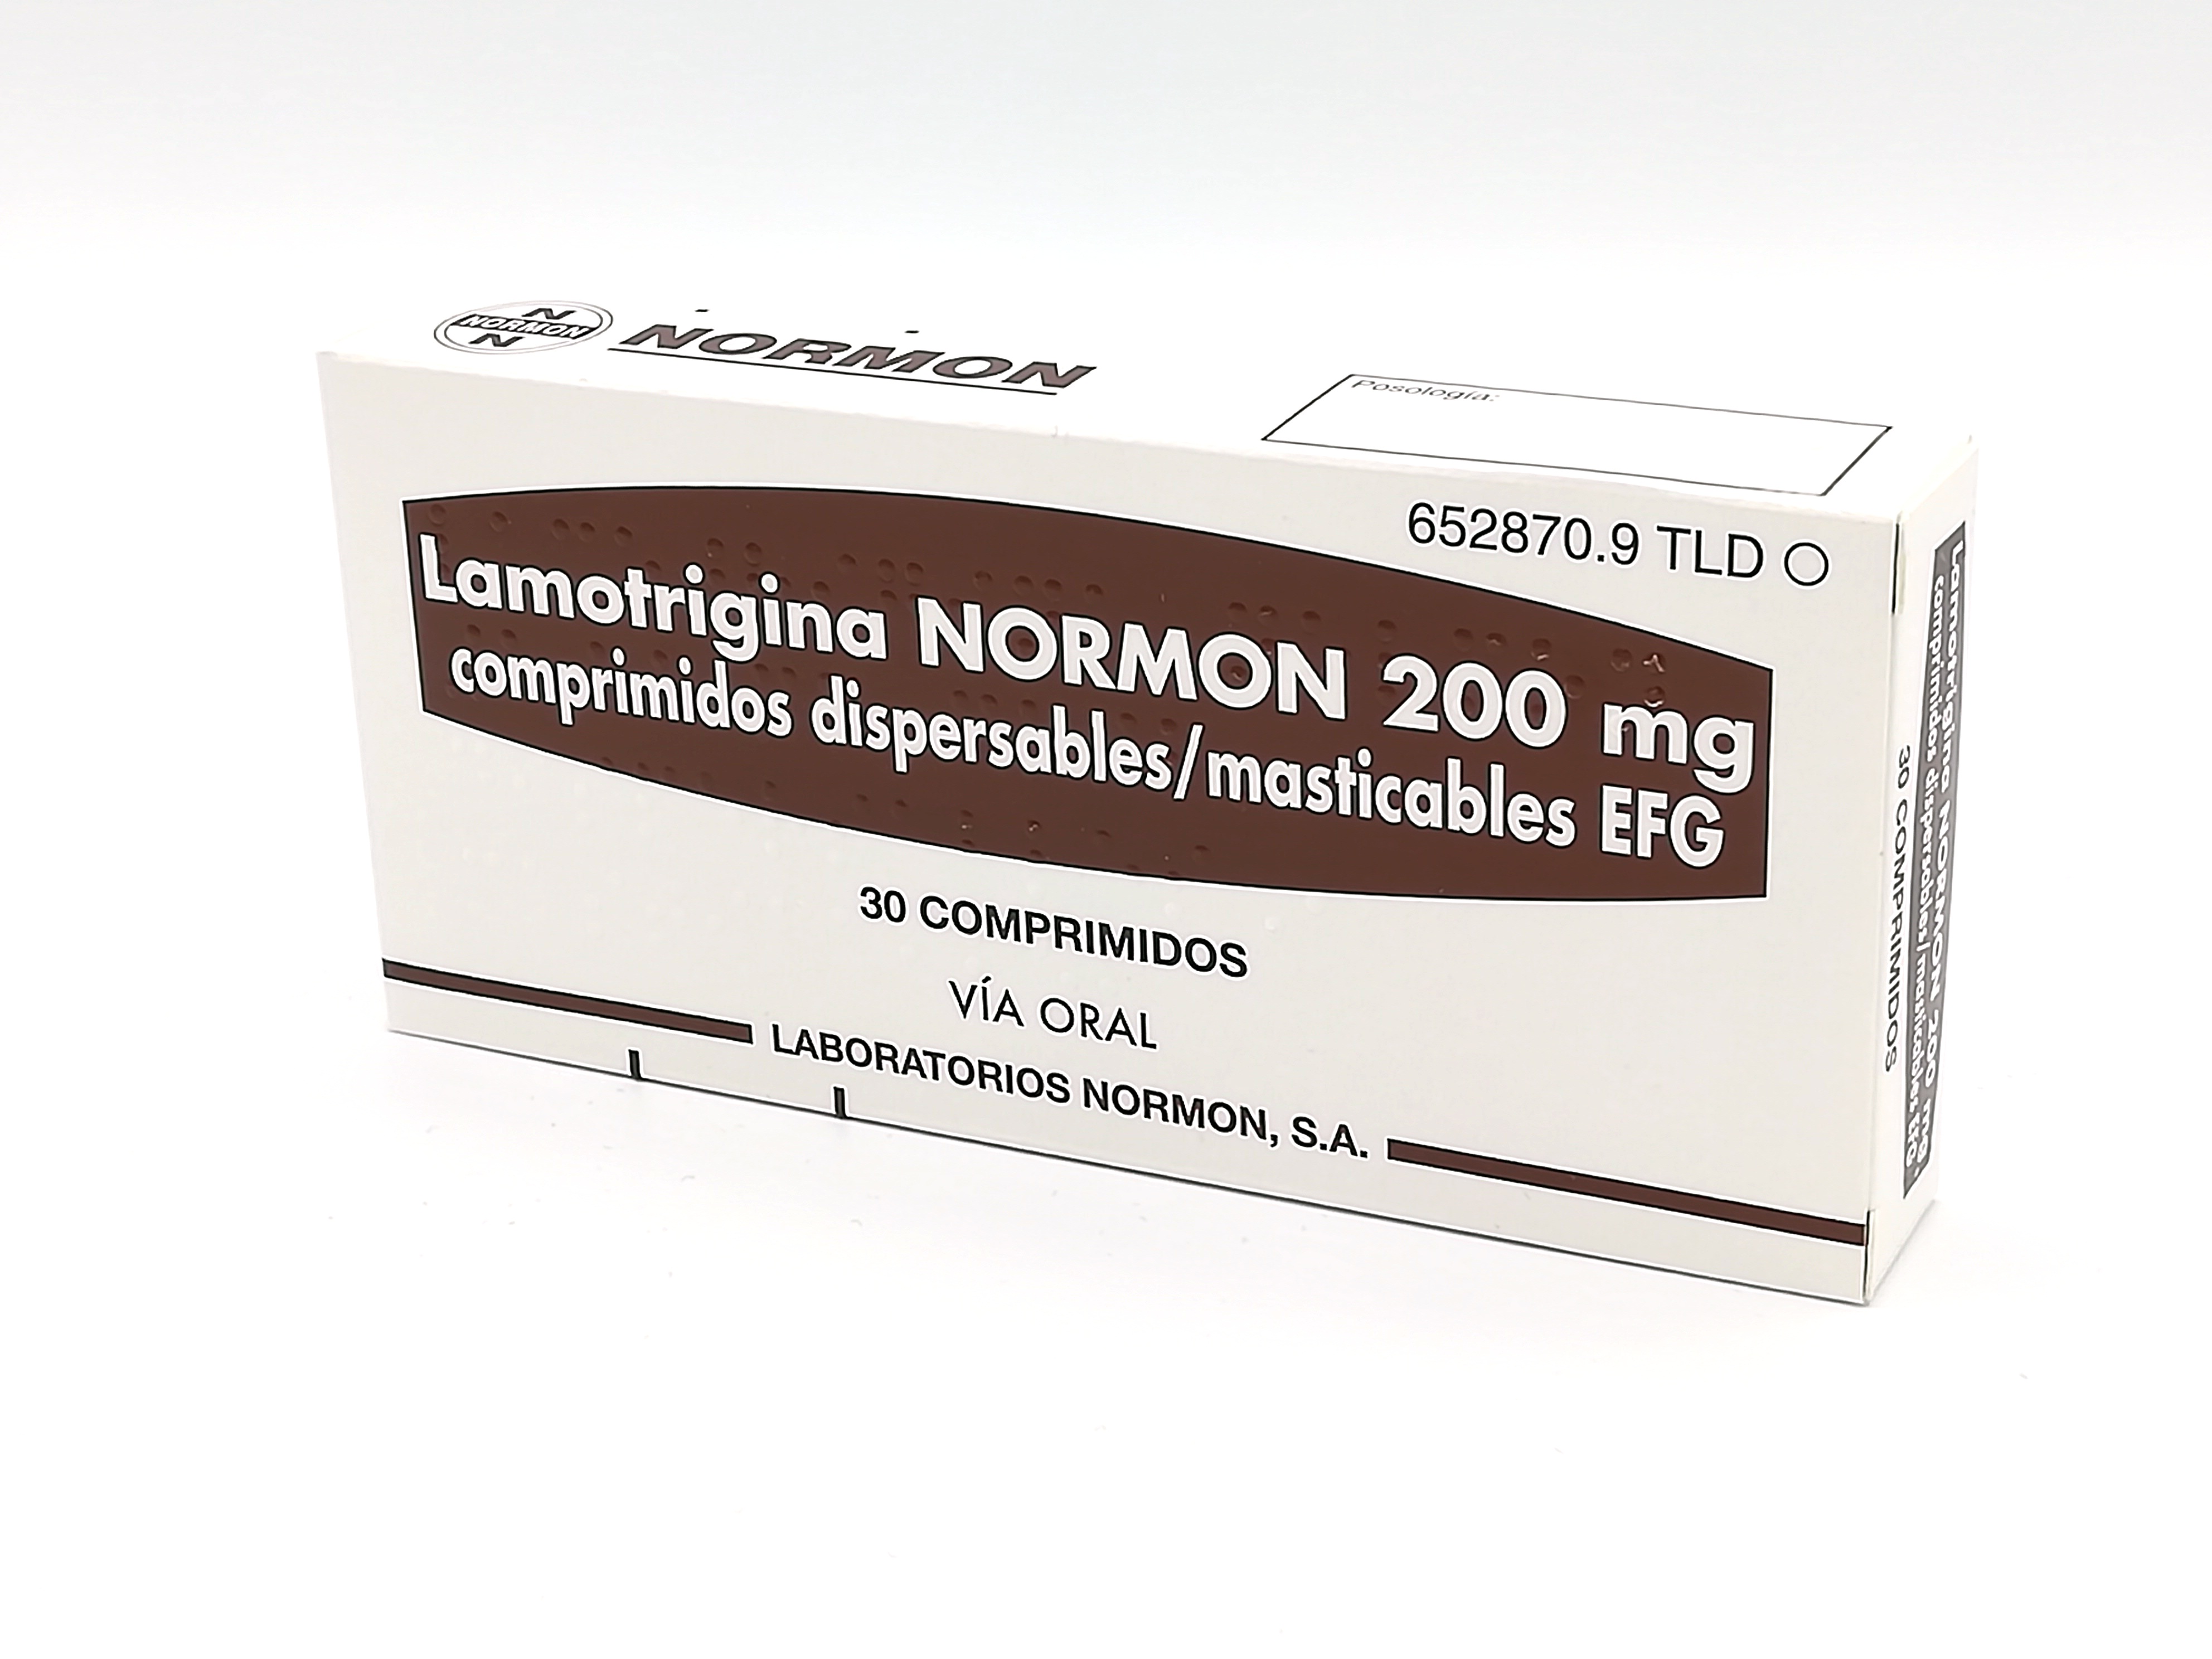 LAMOTRIGINA NORMON EFG 200 mg 30 COMPRIMIDOS DISPERSABLES